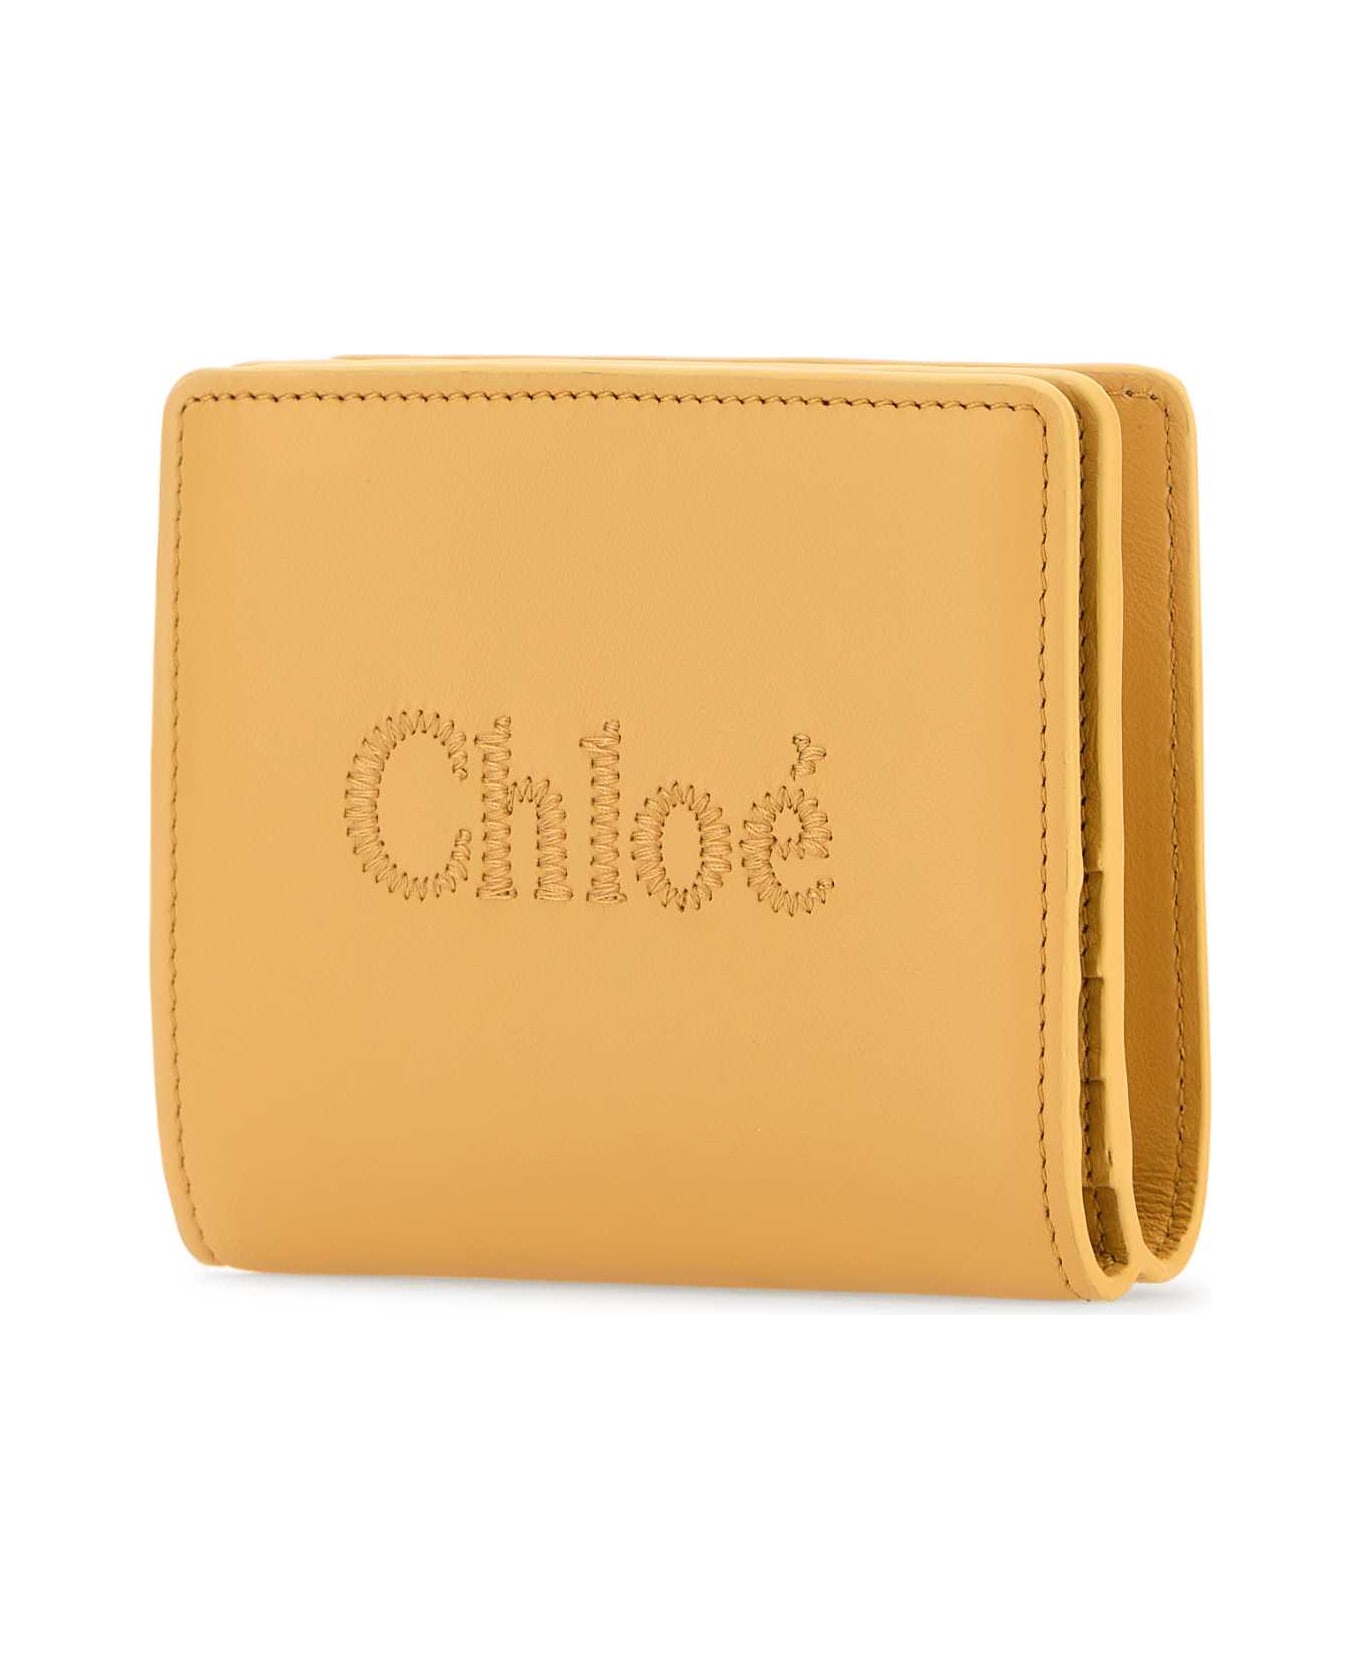 Chloé Peach Leather Wallet - HONEYGOLD 財布